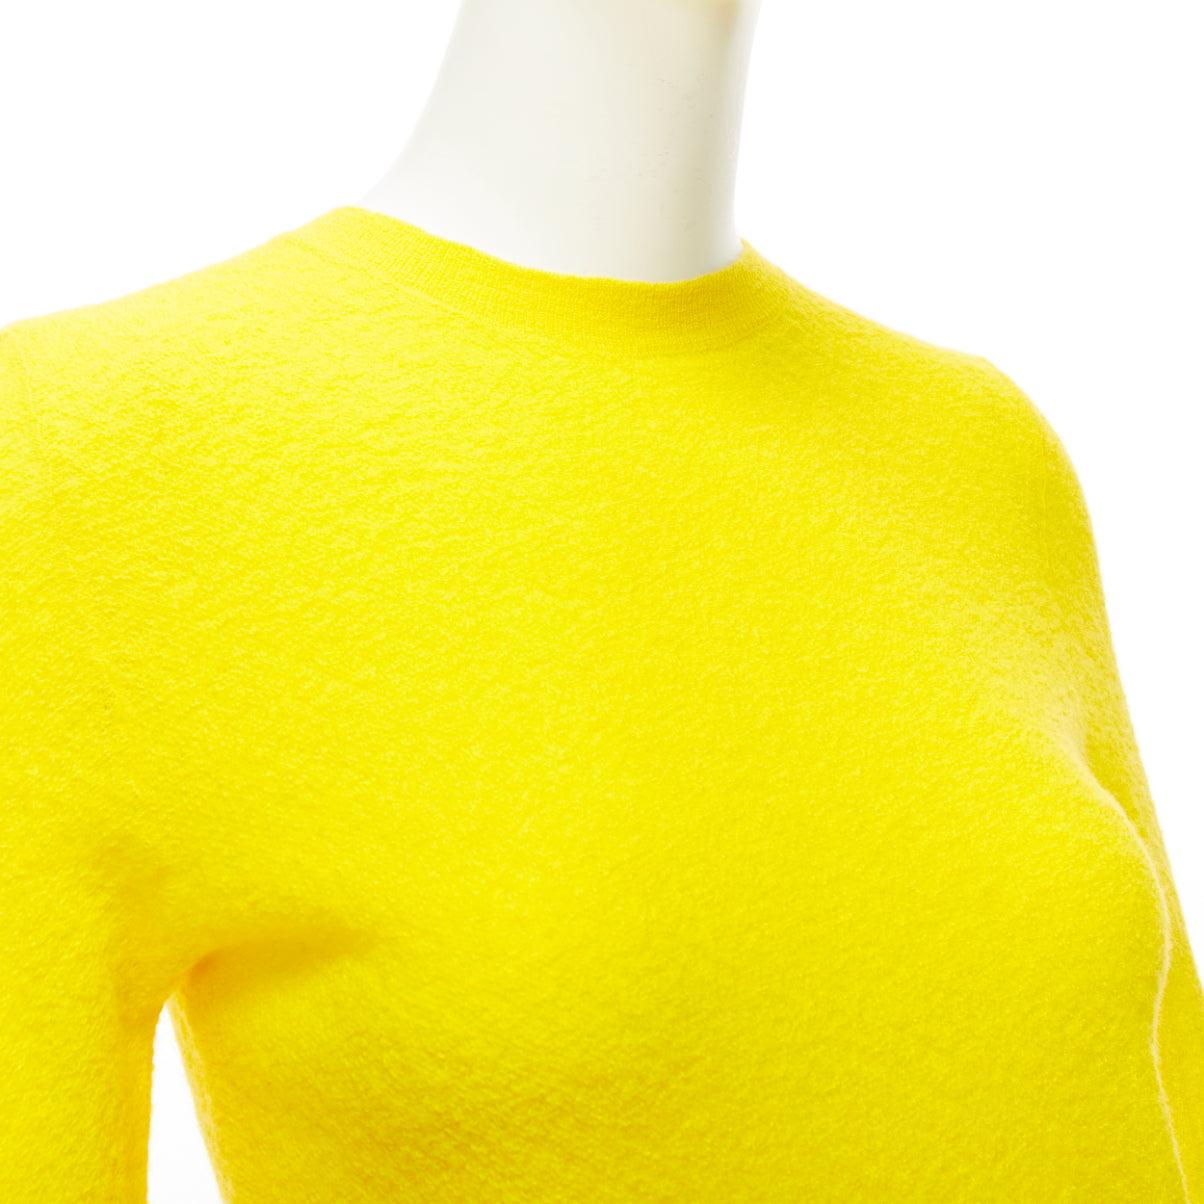 OLD CELINE Phoebe Philo 100% wool sunshine yellow crew neck sweater S For Sale 3